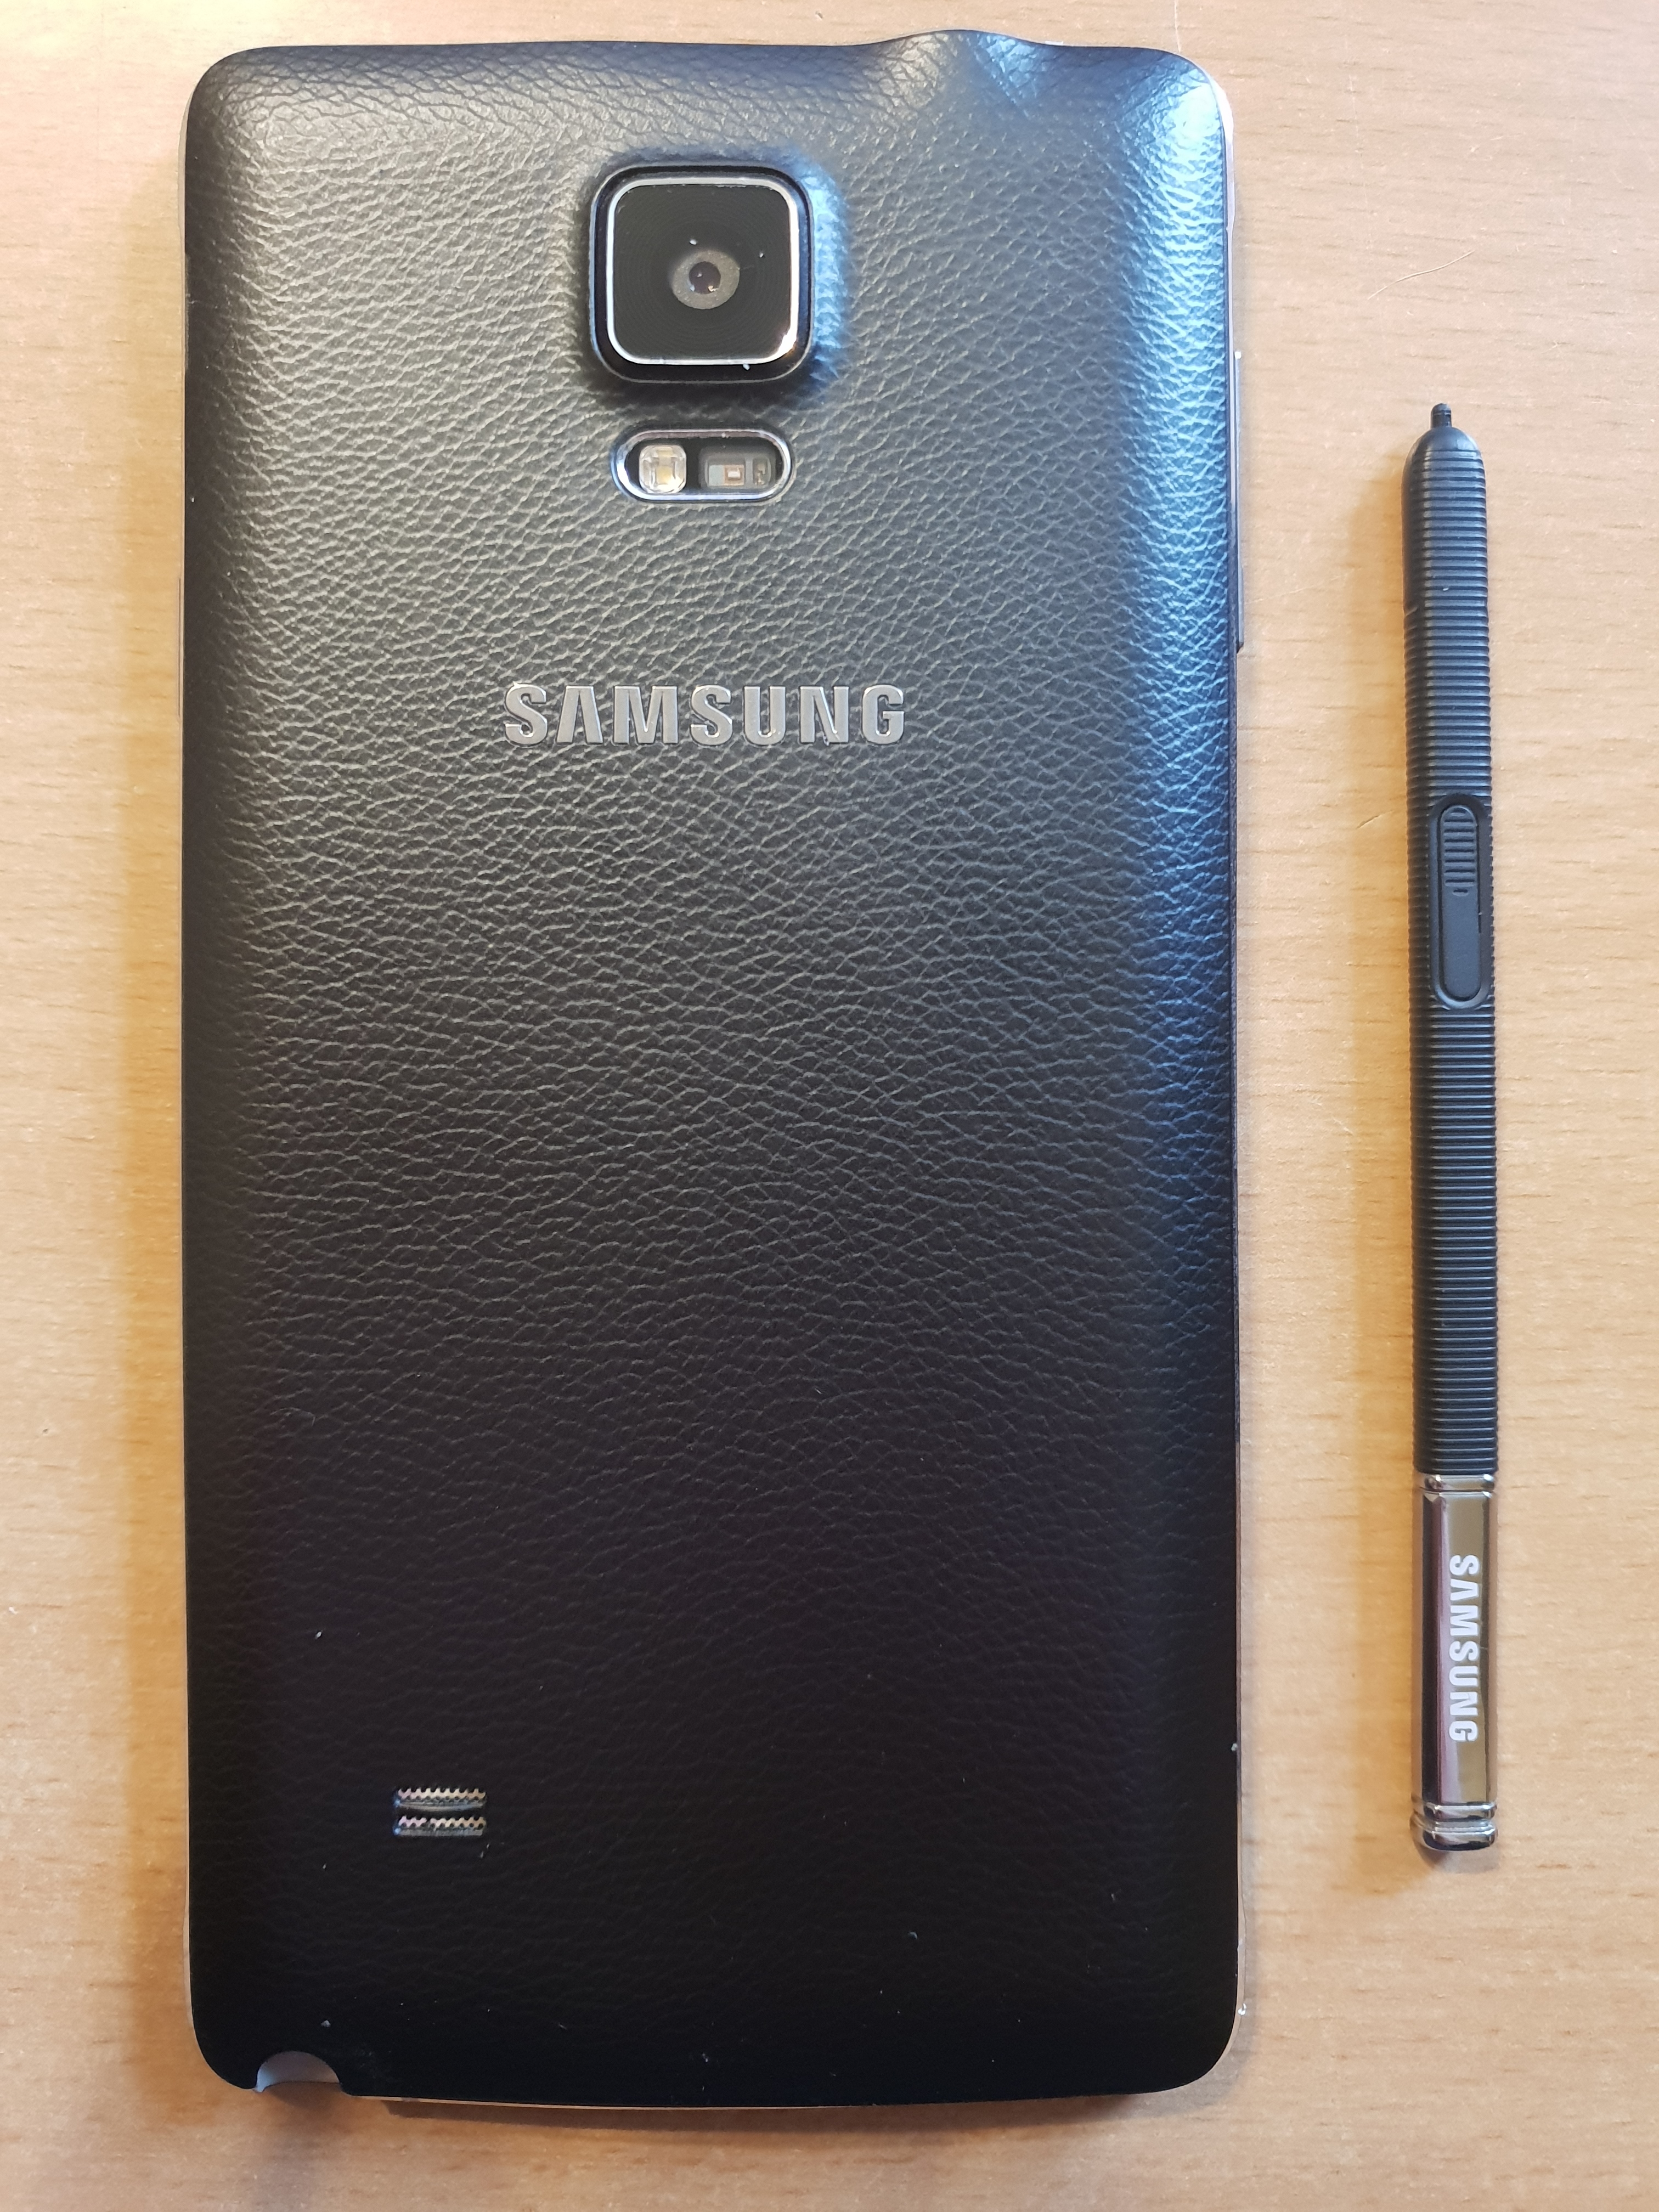 Samsung Galaxy Note 4 32GB - Black - Locked 2